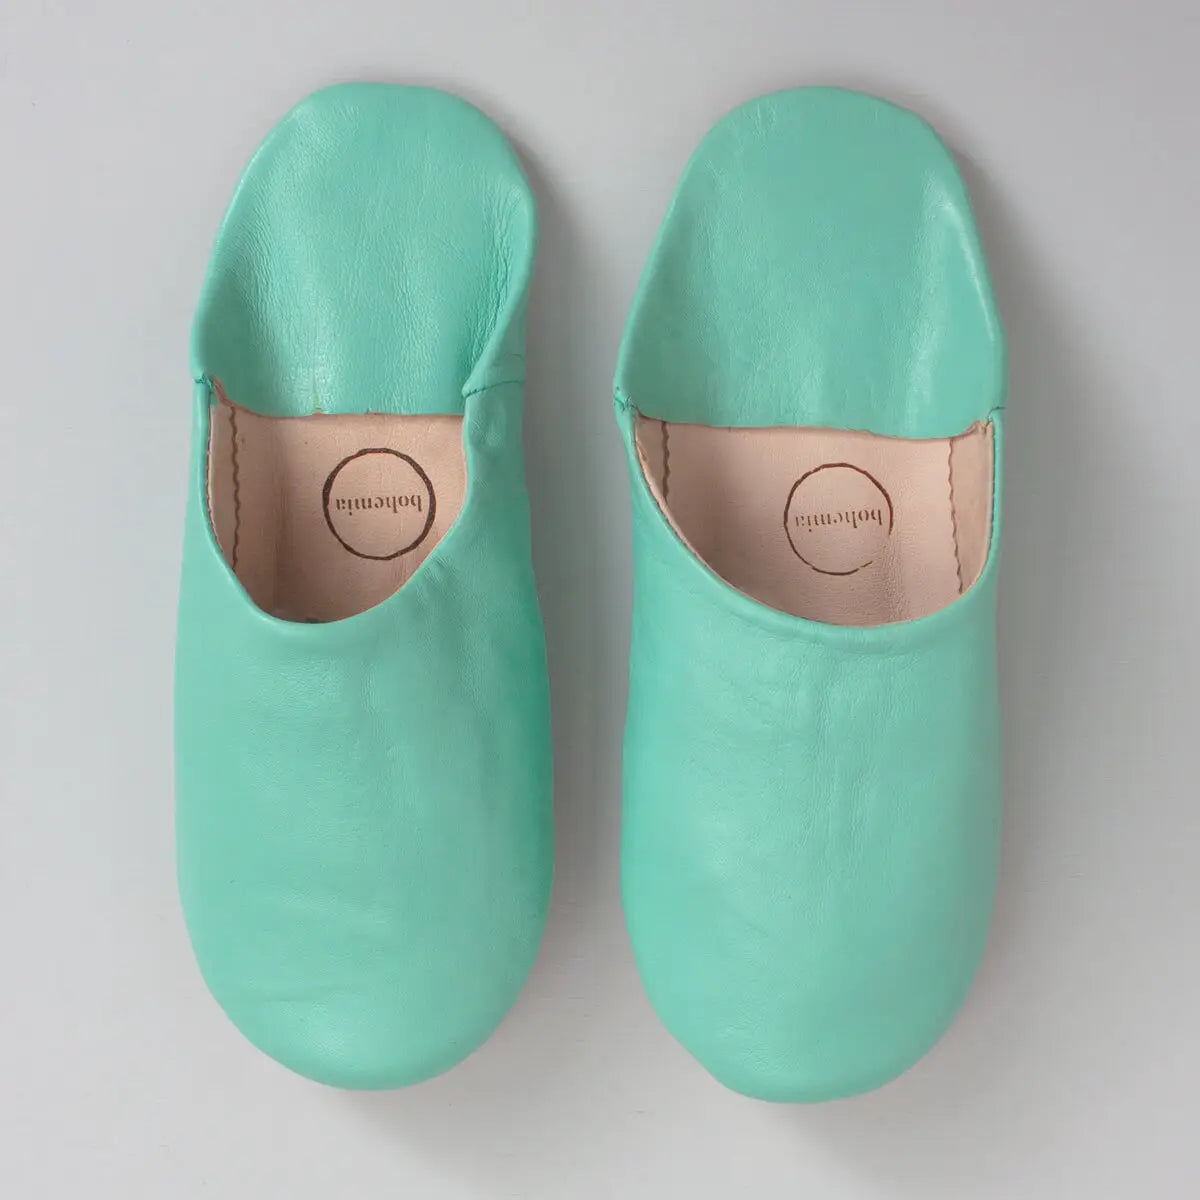 Duck Egg Moroccan Slippers - The Nancy Smillie Shop - Art, Jewellery & Designer Gifts Glasgow